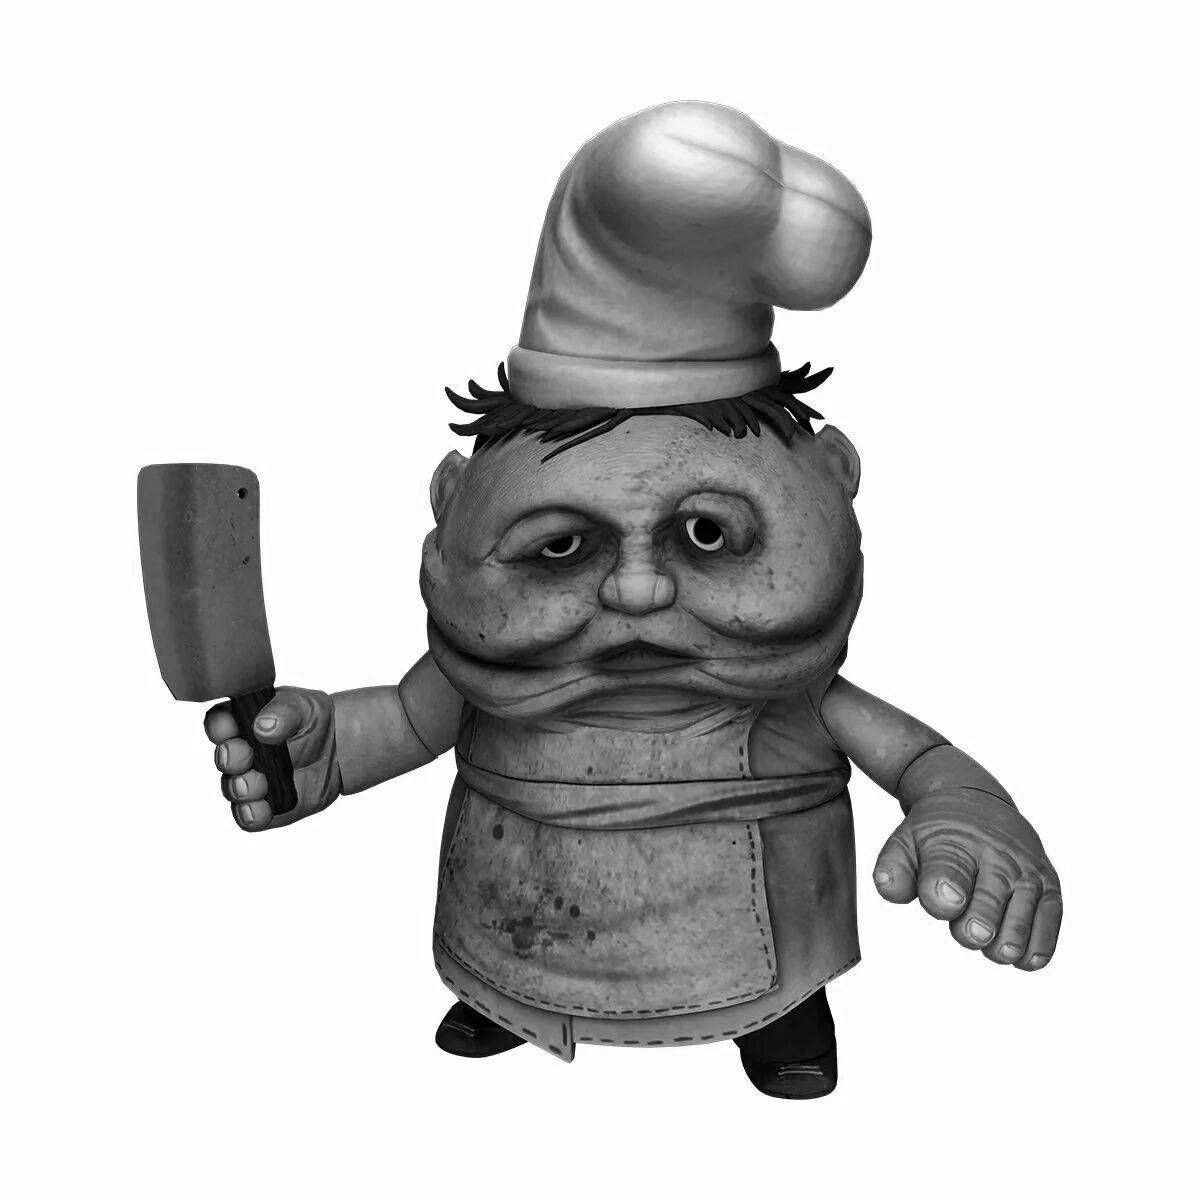 Cute little chef nightmare